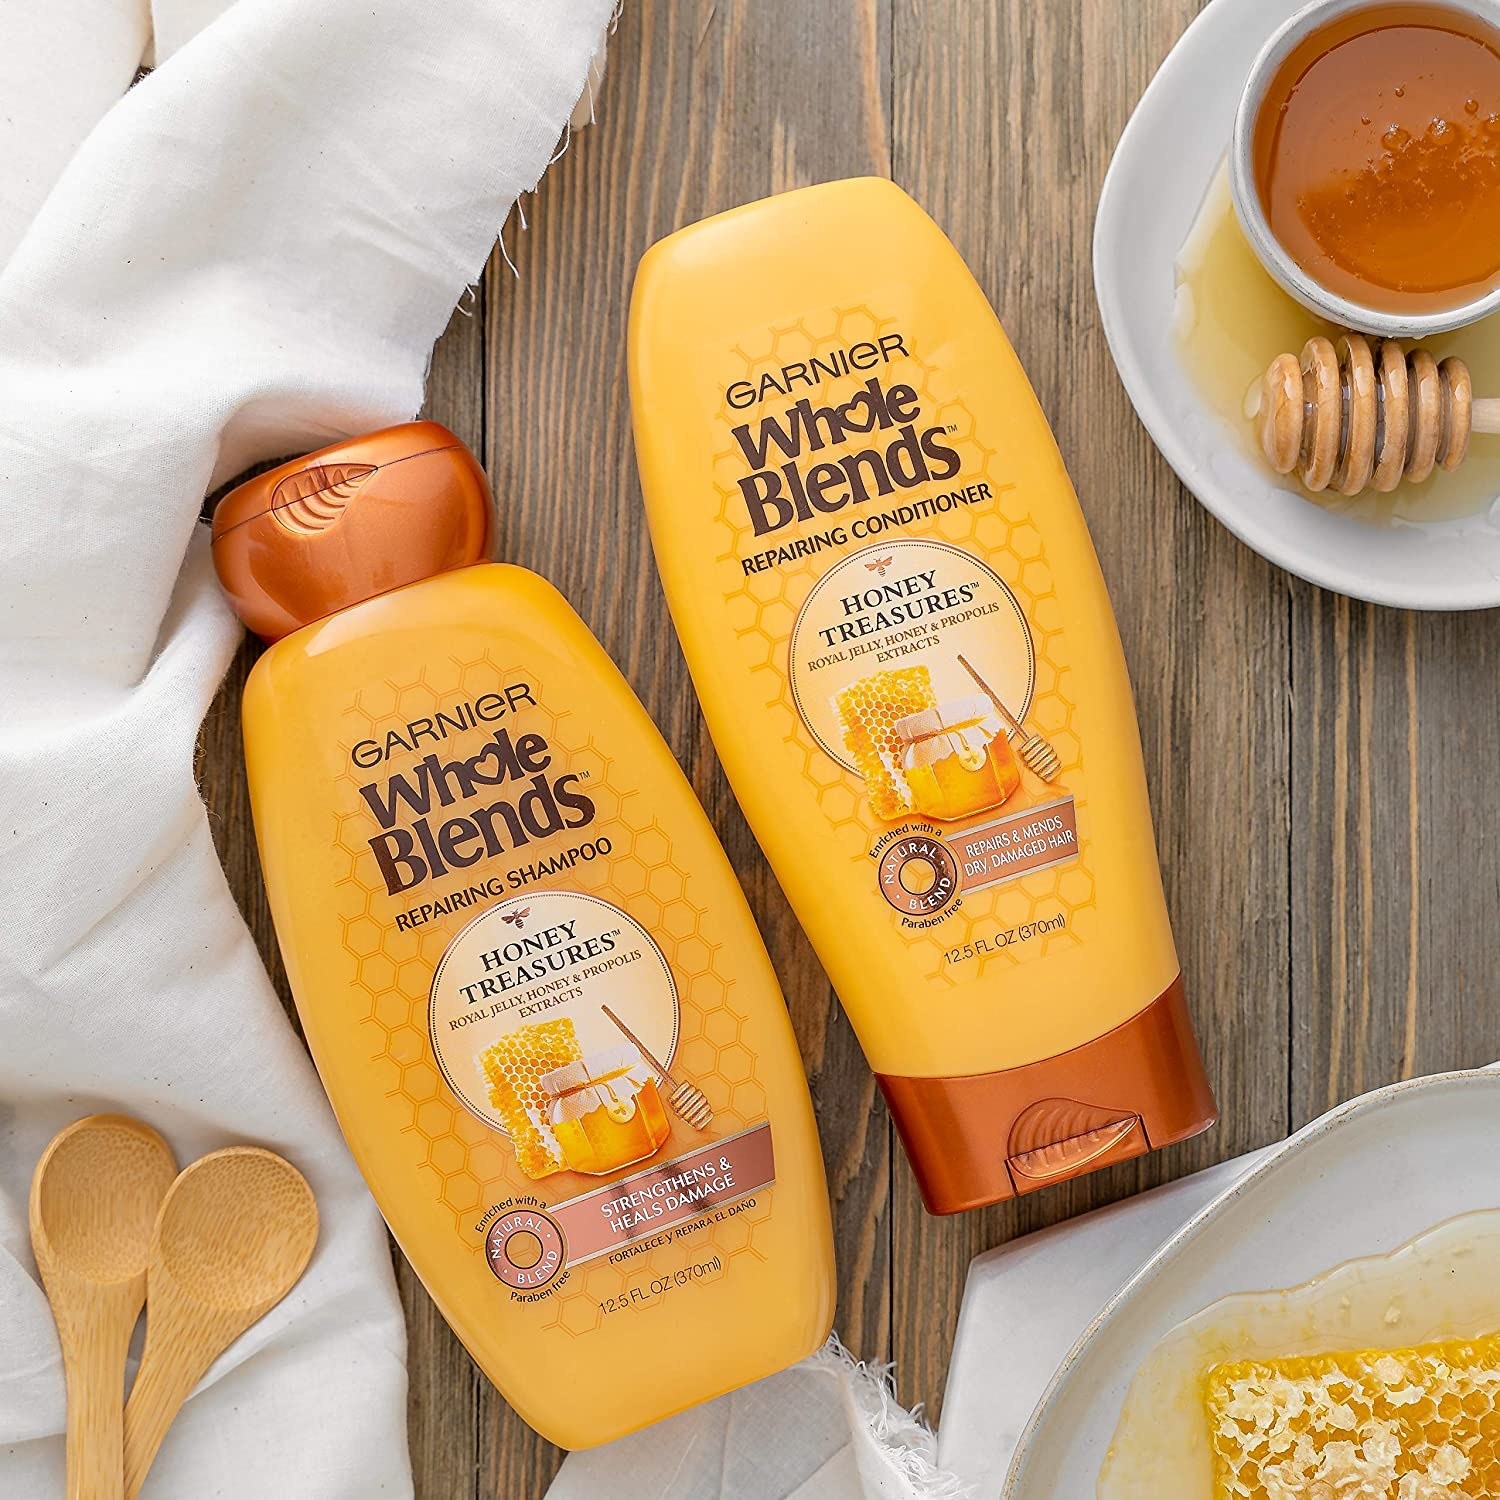 the yellow and orange bottles of shampoo 